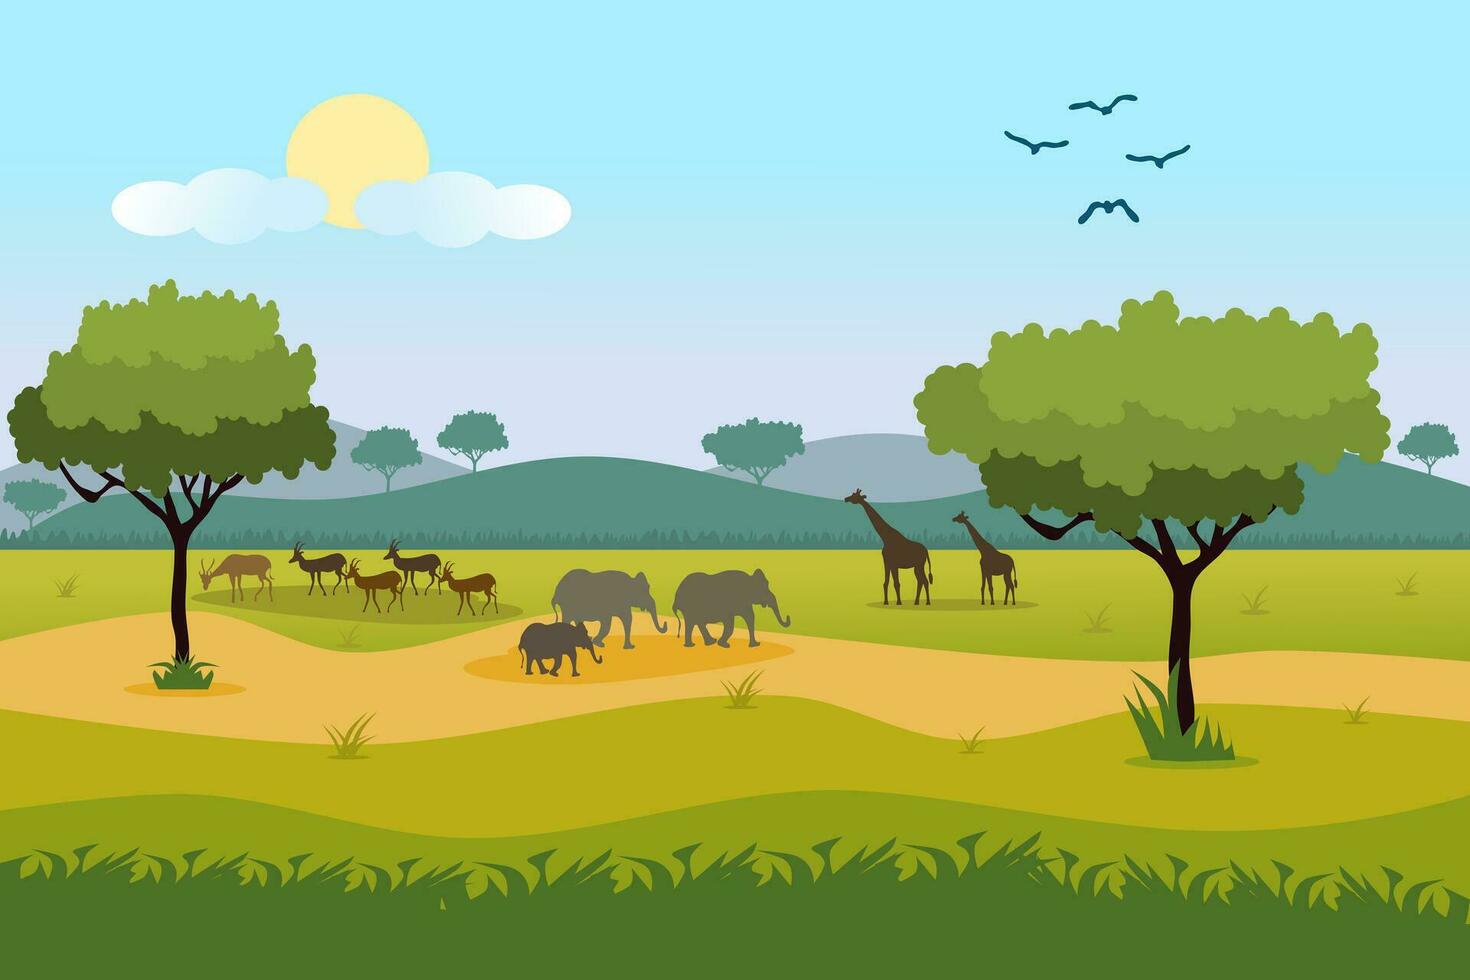 African Savanna forest landscape scene illustration with giraffe, deer, elephant, and bird. vector